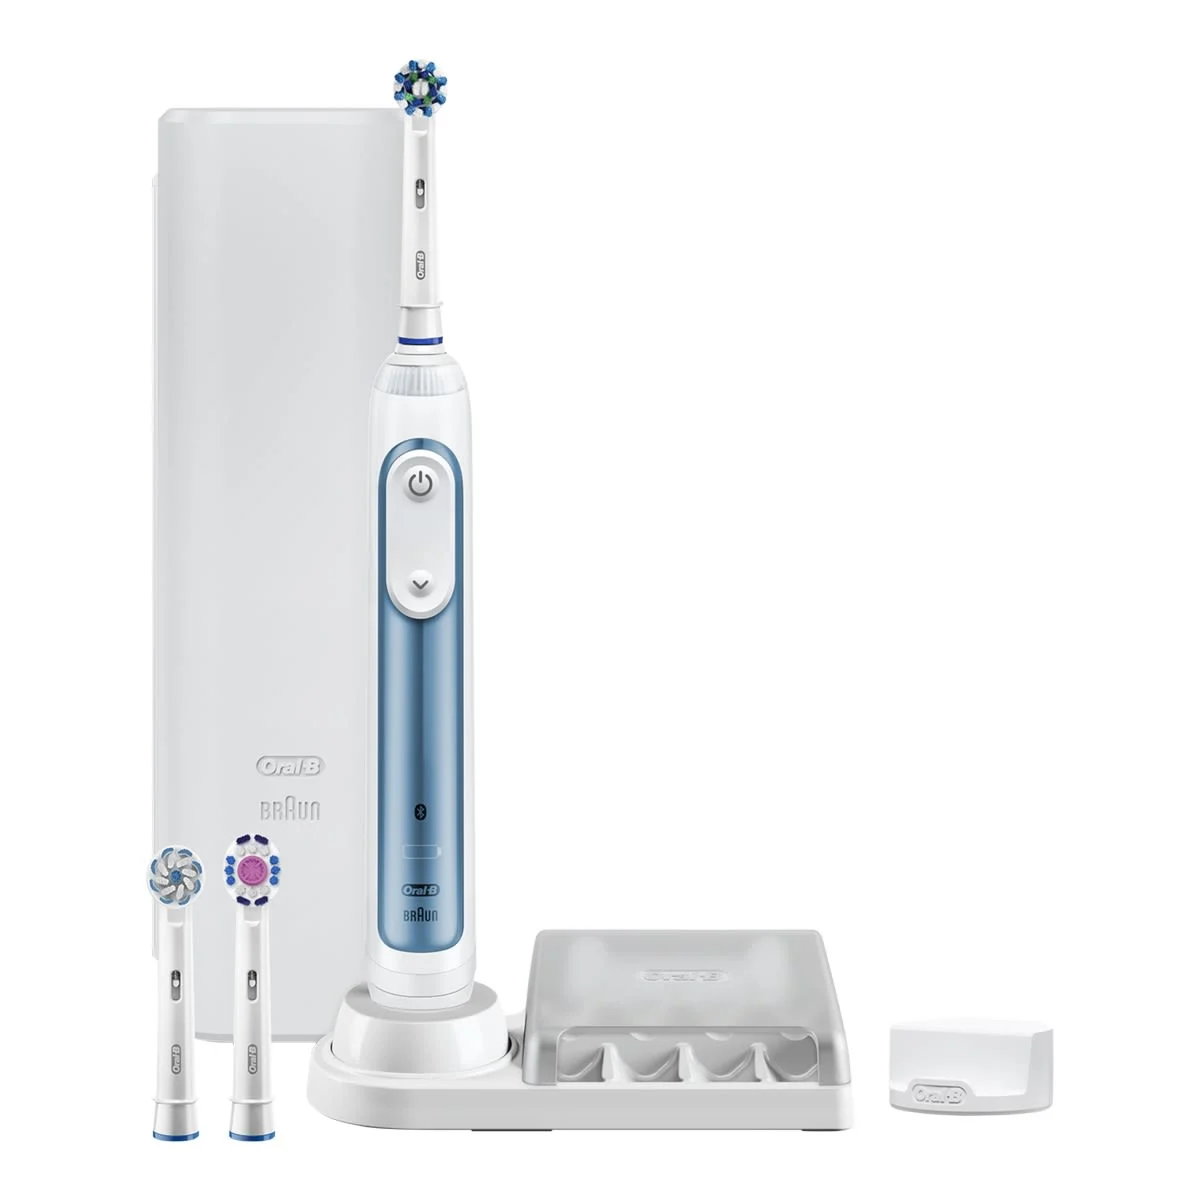 Oral-B Smart 6 6000N electric toothbrush